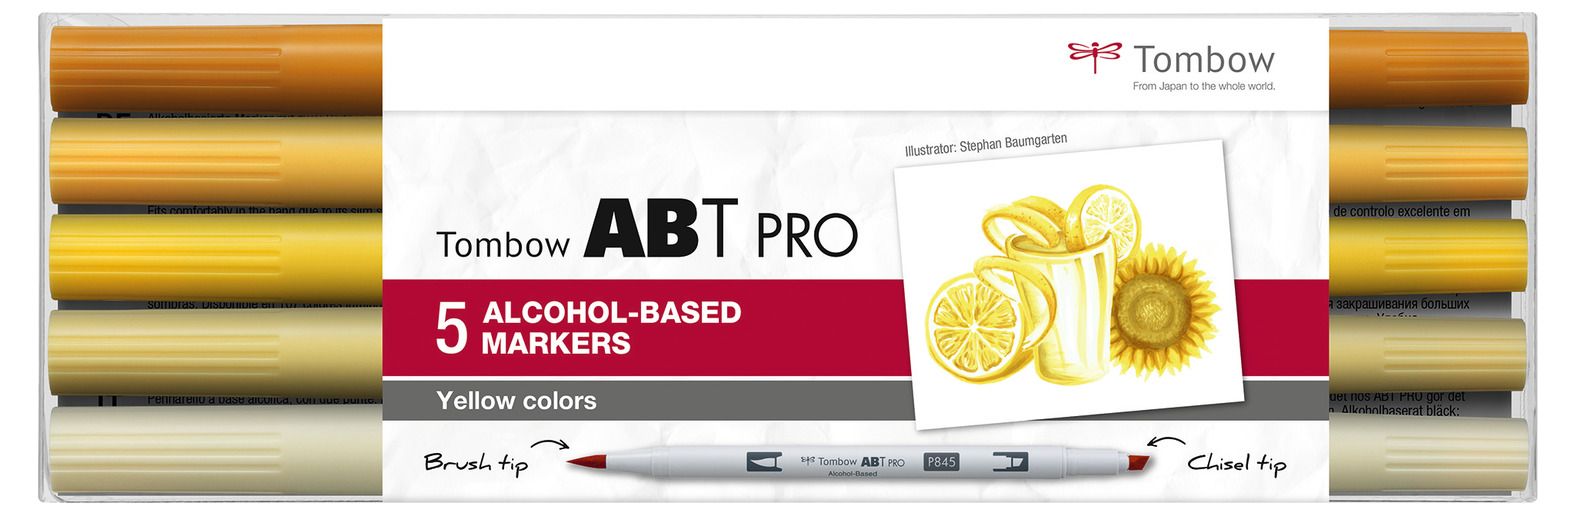 Tombow • ABT PRO alcohol-based marker set Pastel colours 5pcs